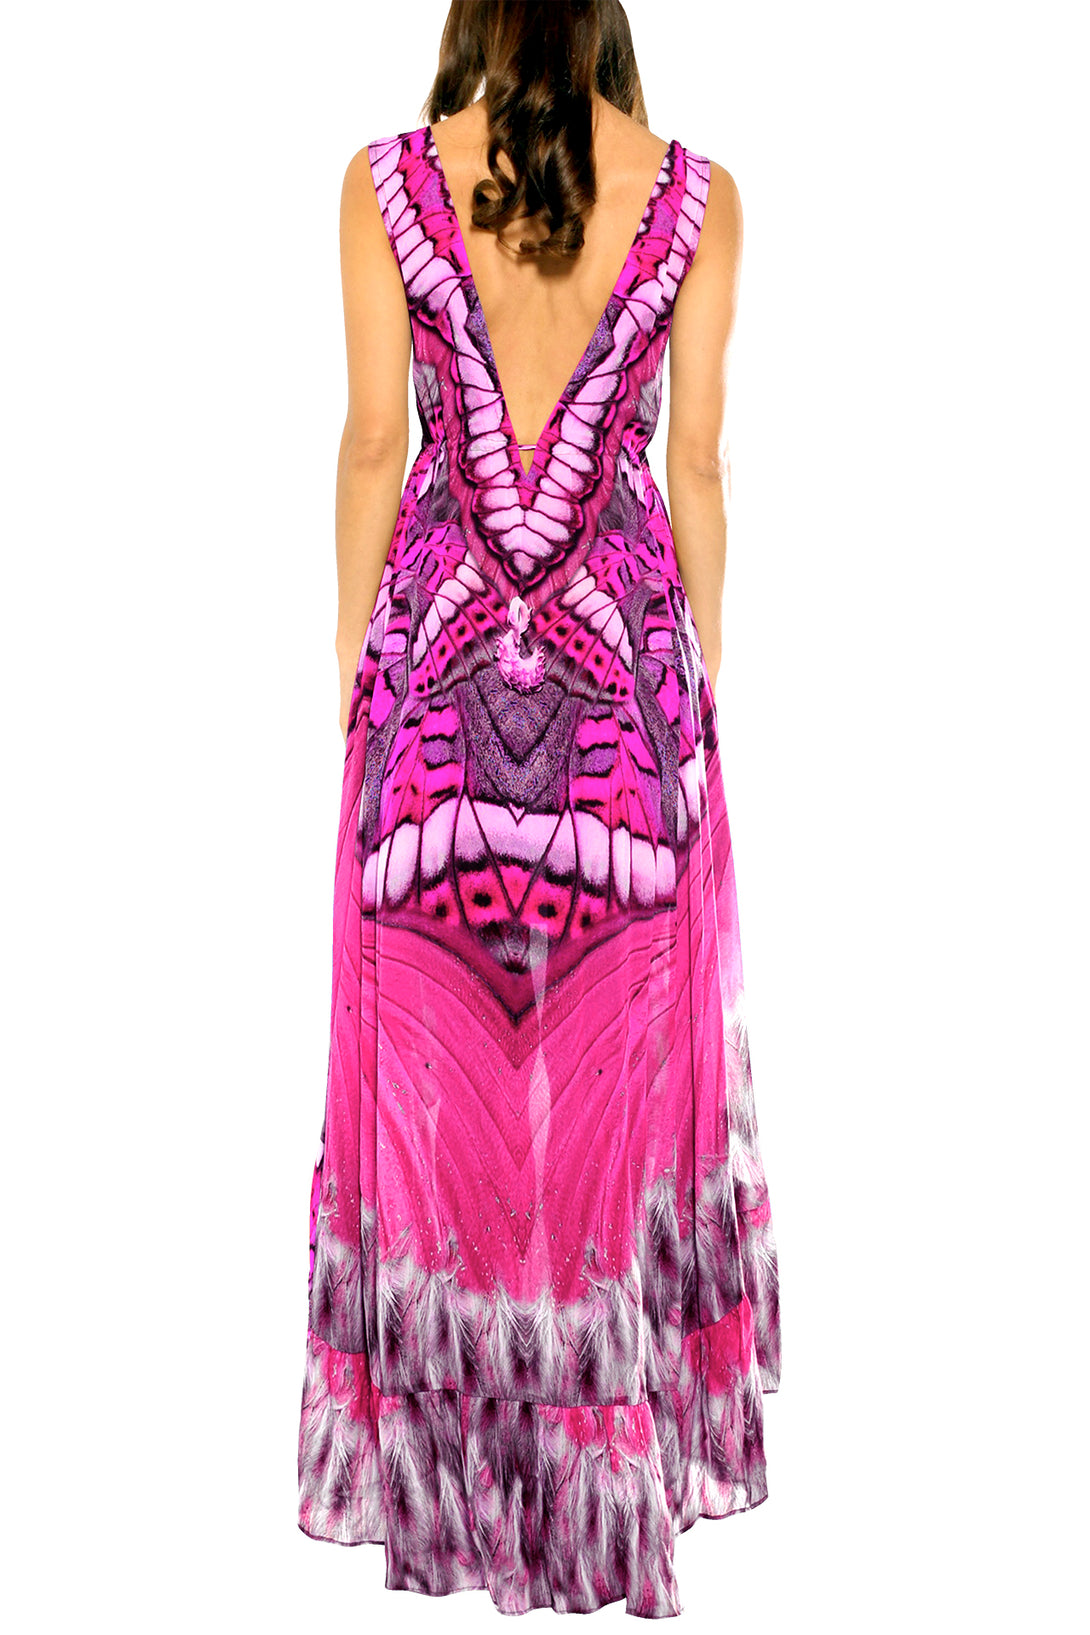  hot pink dress maxi, high and low cocktail dresses, plunging v neck formal dress, Shahida Parides,